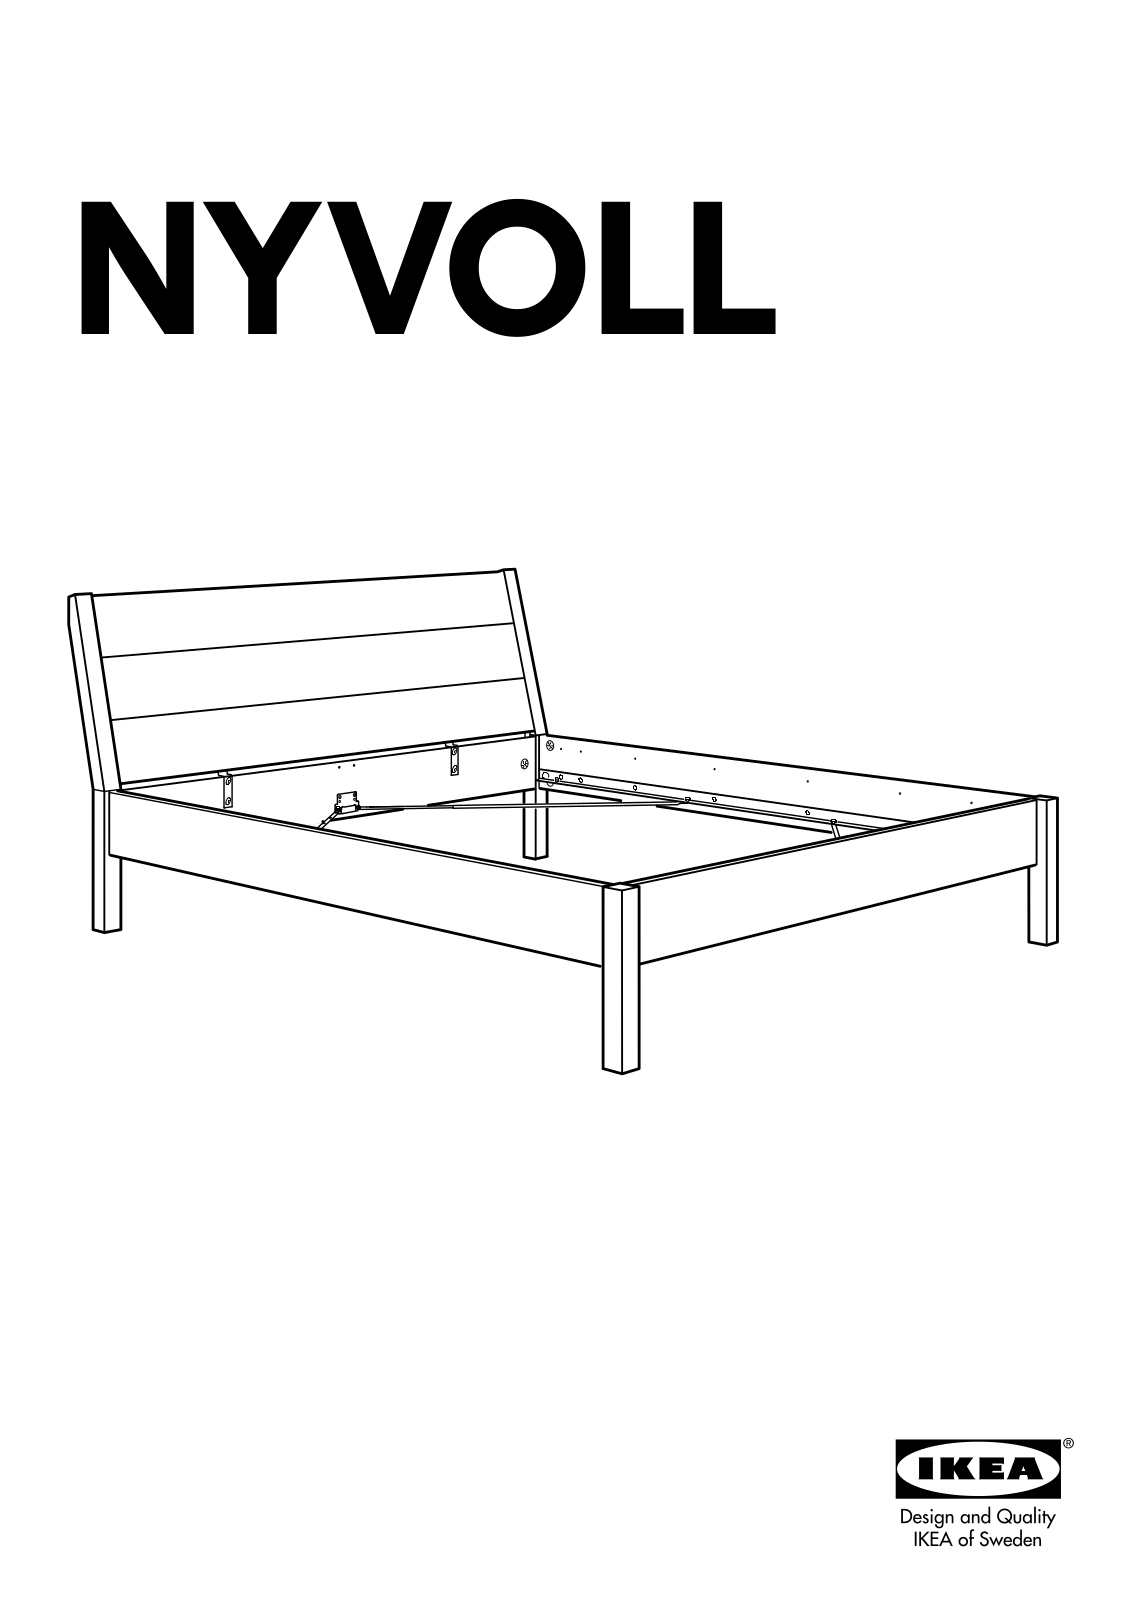 IKEA NYVOLL User Manual